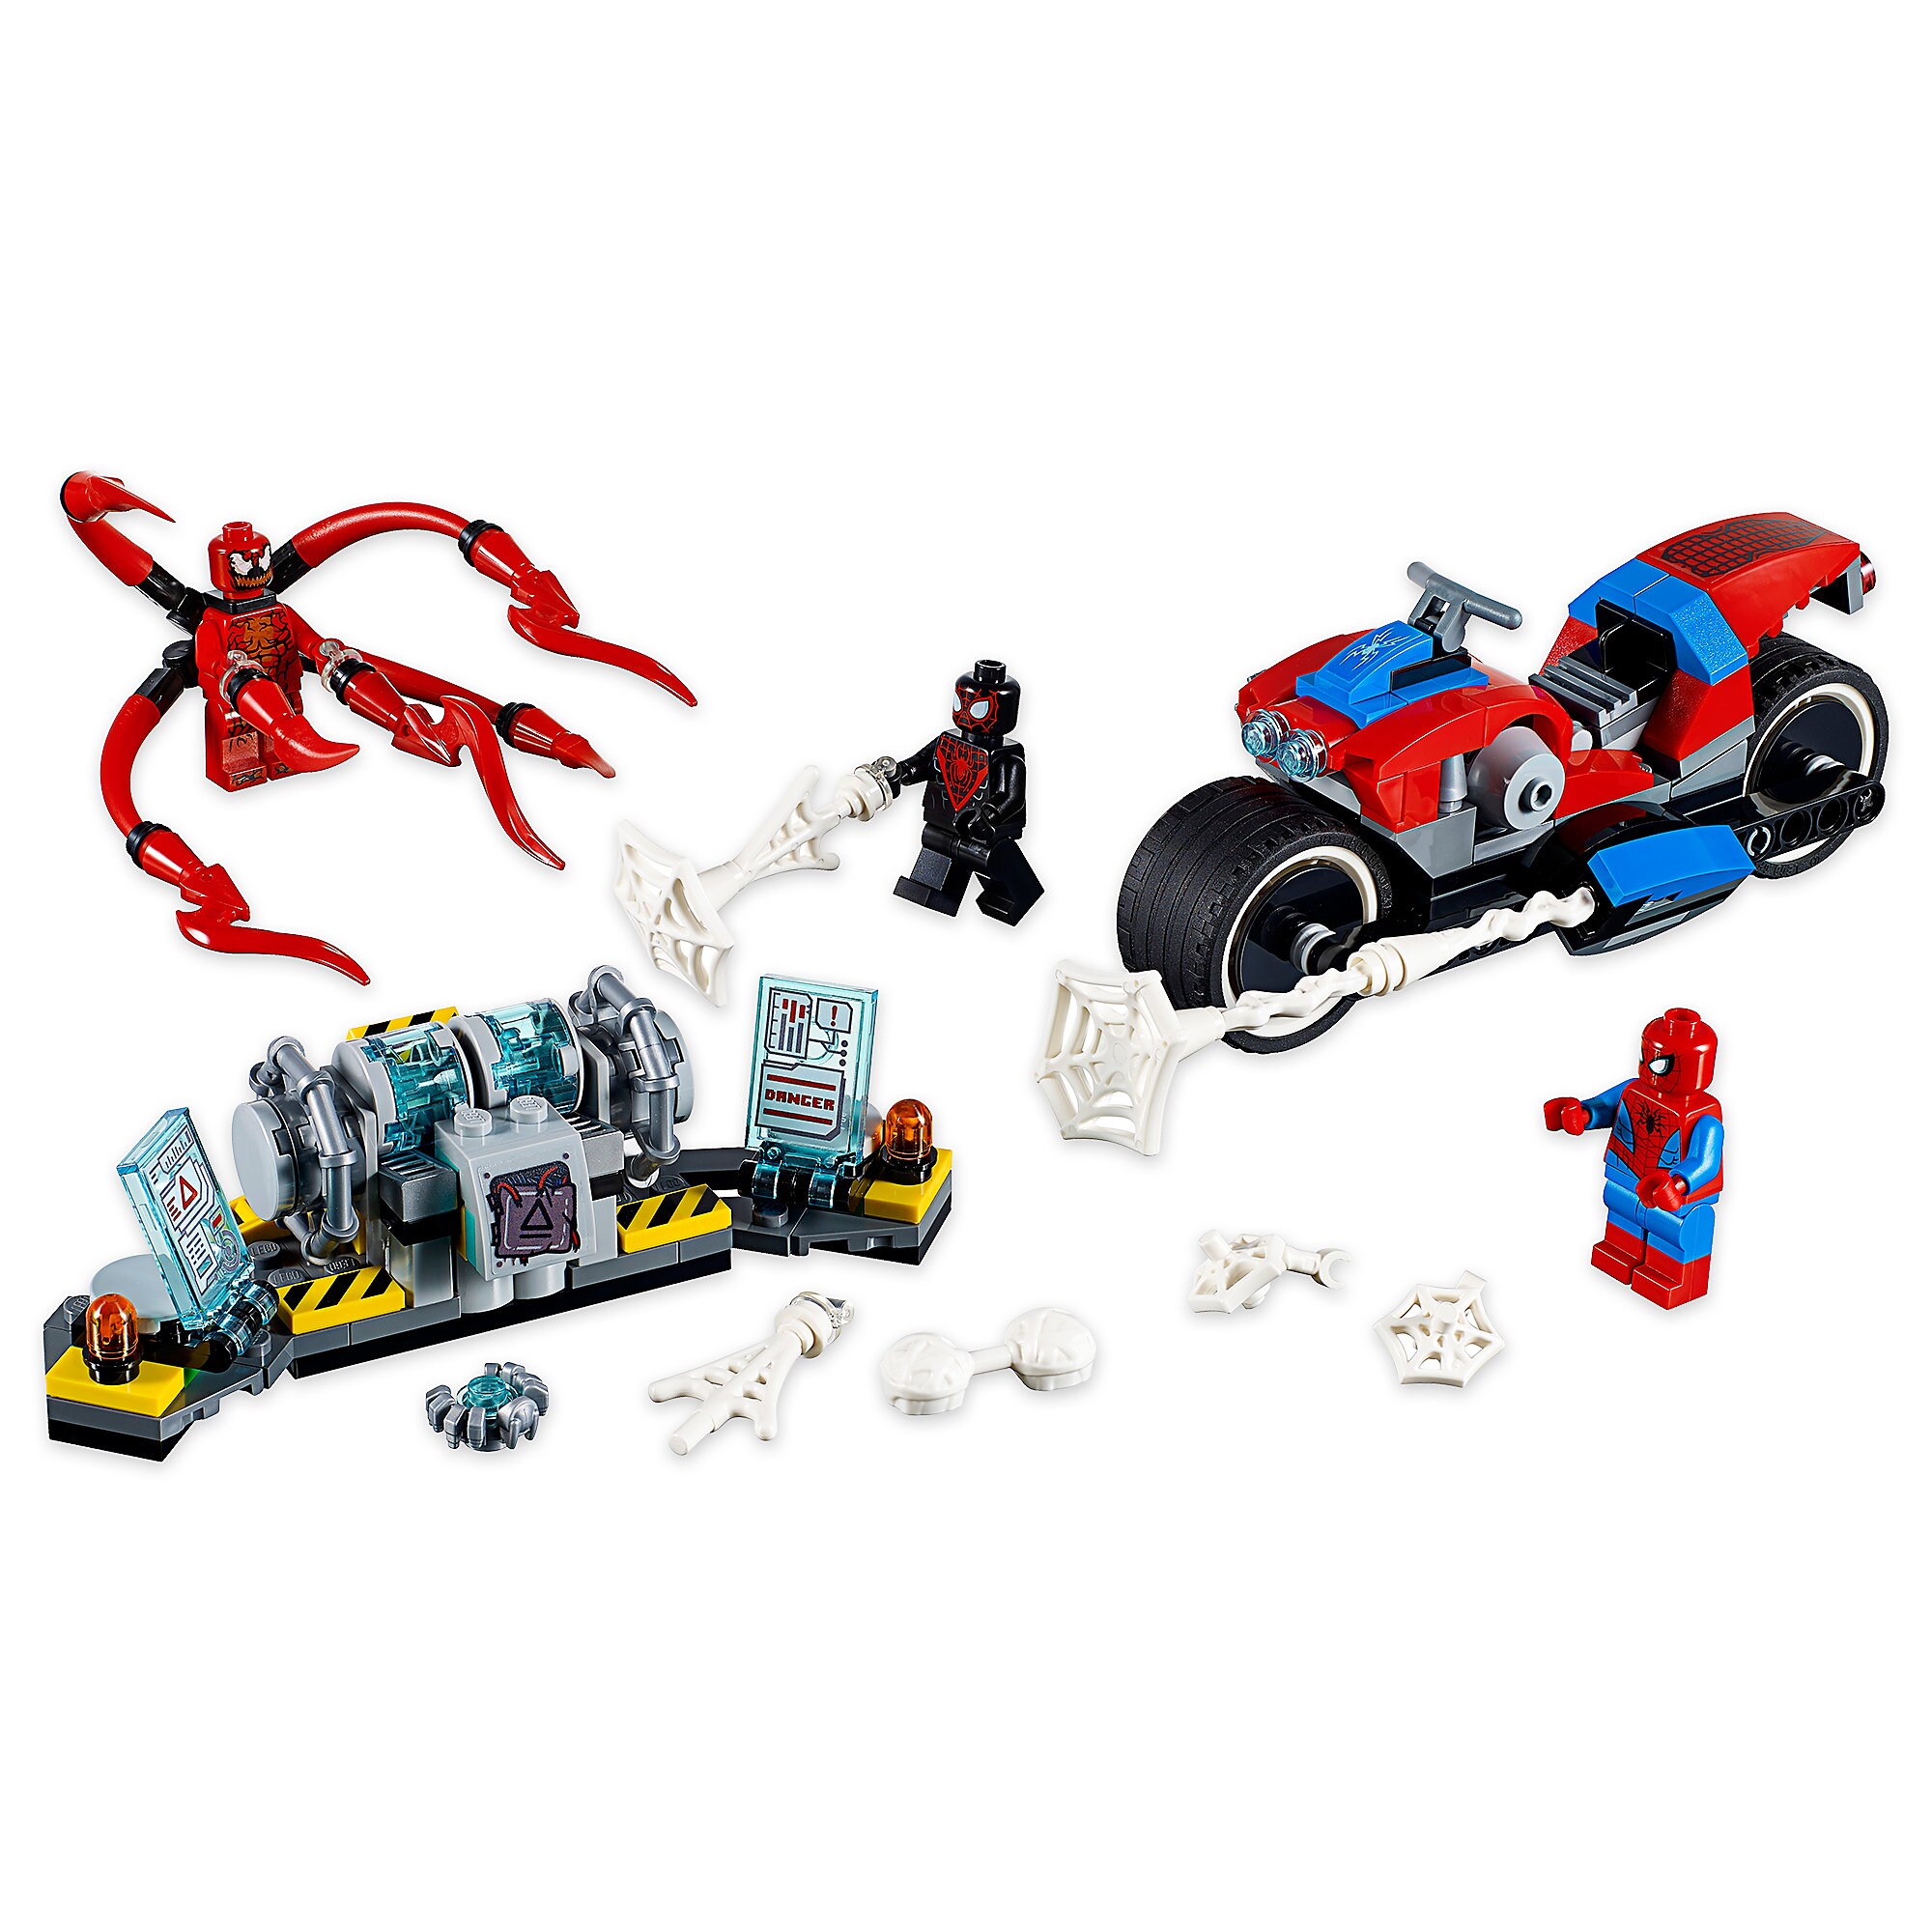 Spider-Man Bike Rescue Playset by LEGO